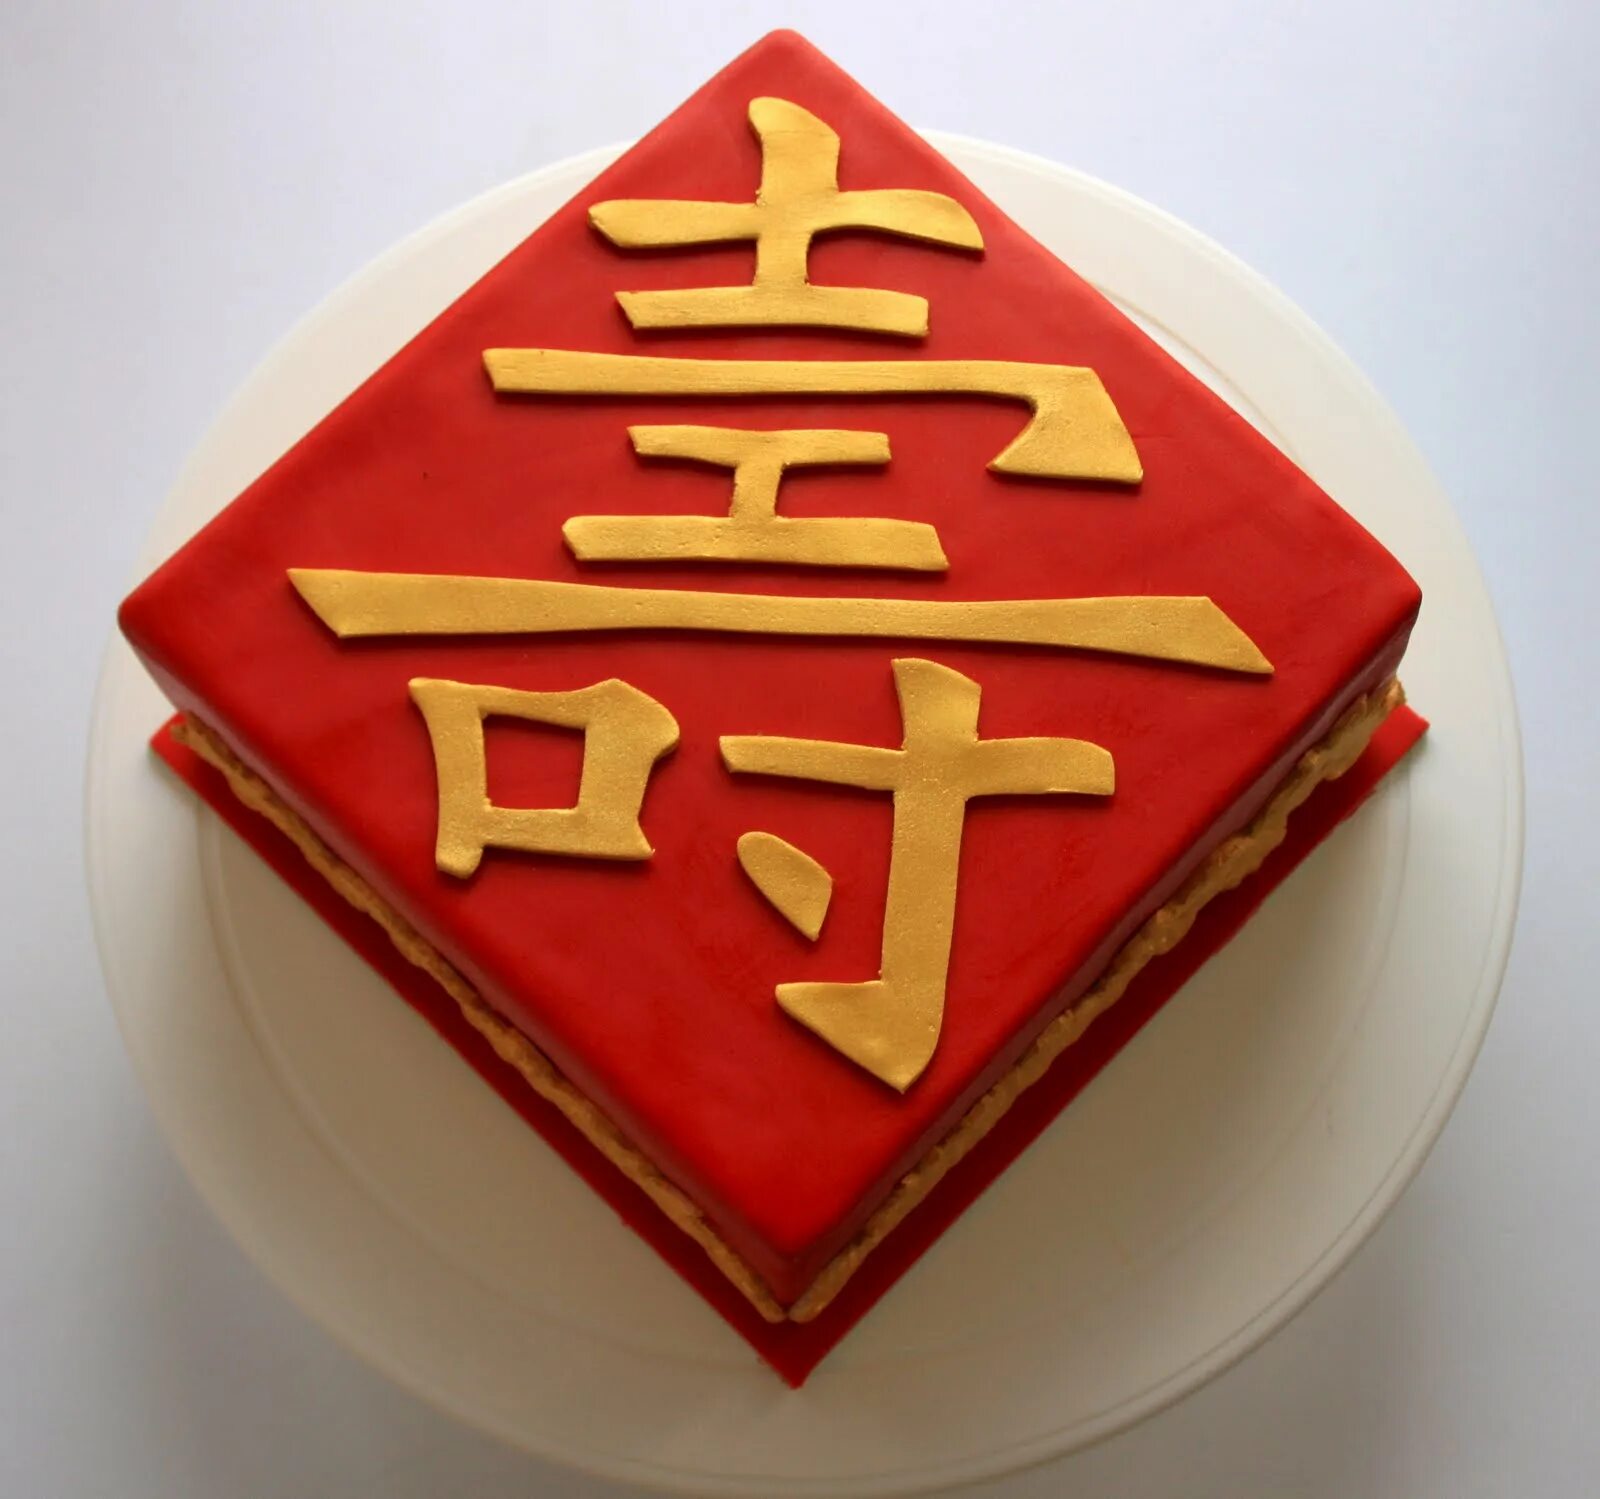 China birthday. Китайский торт. Торт в японском стиле. Торт в китайском стиле. Торт с китайской тематикой.